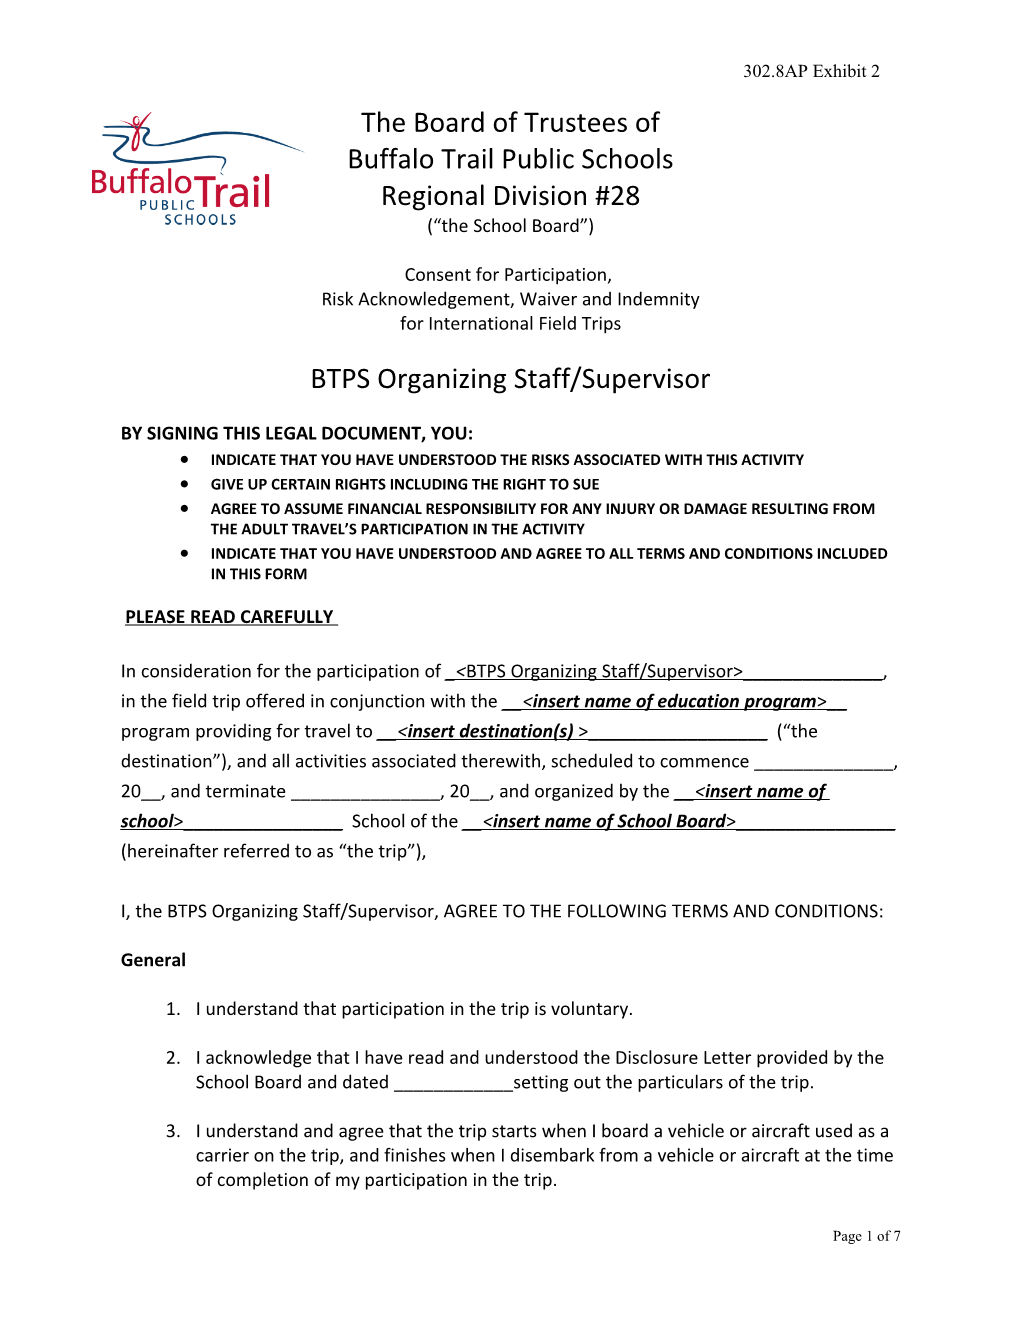 Buffalo Trail - International Field Trips Consent Form - 2015/16 (00057741)